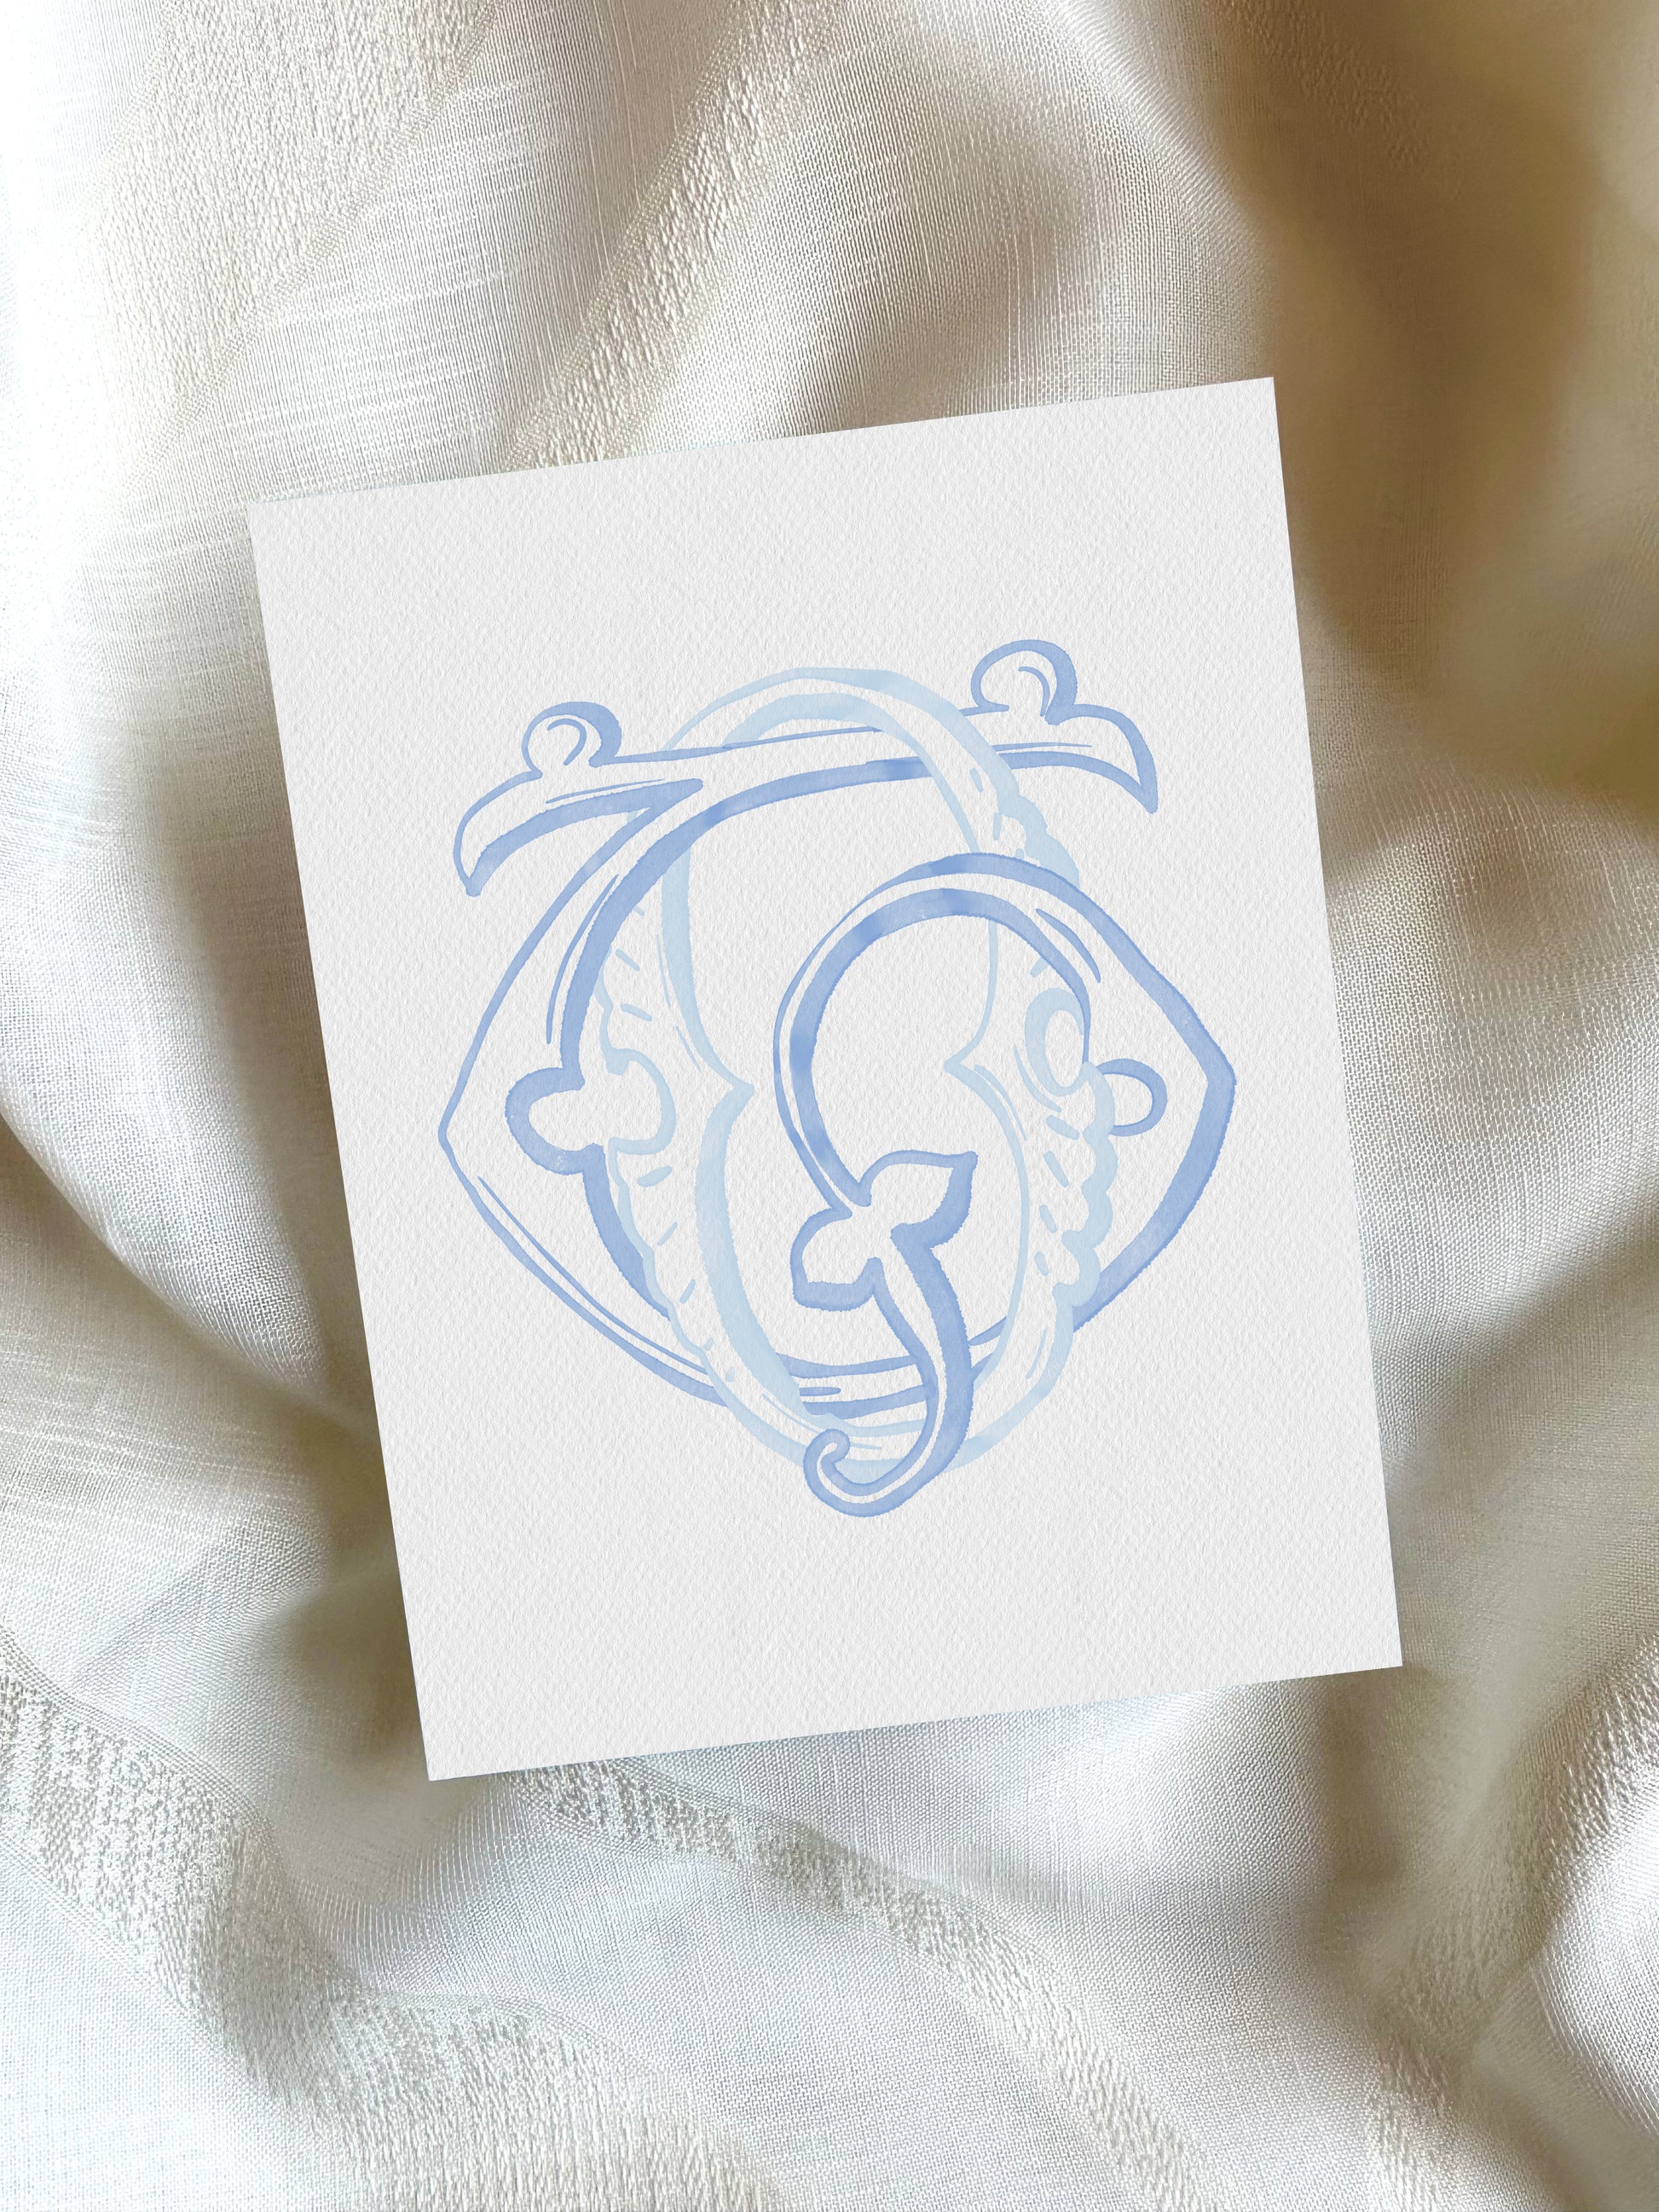 2 Letter Monogram with Letters OT TO | Digital Download - Wedding Monogram SVG, Personal Logo, Wedding Logo for Wedding Invitations The Wedding Crest Lab